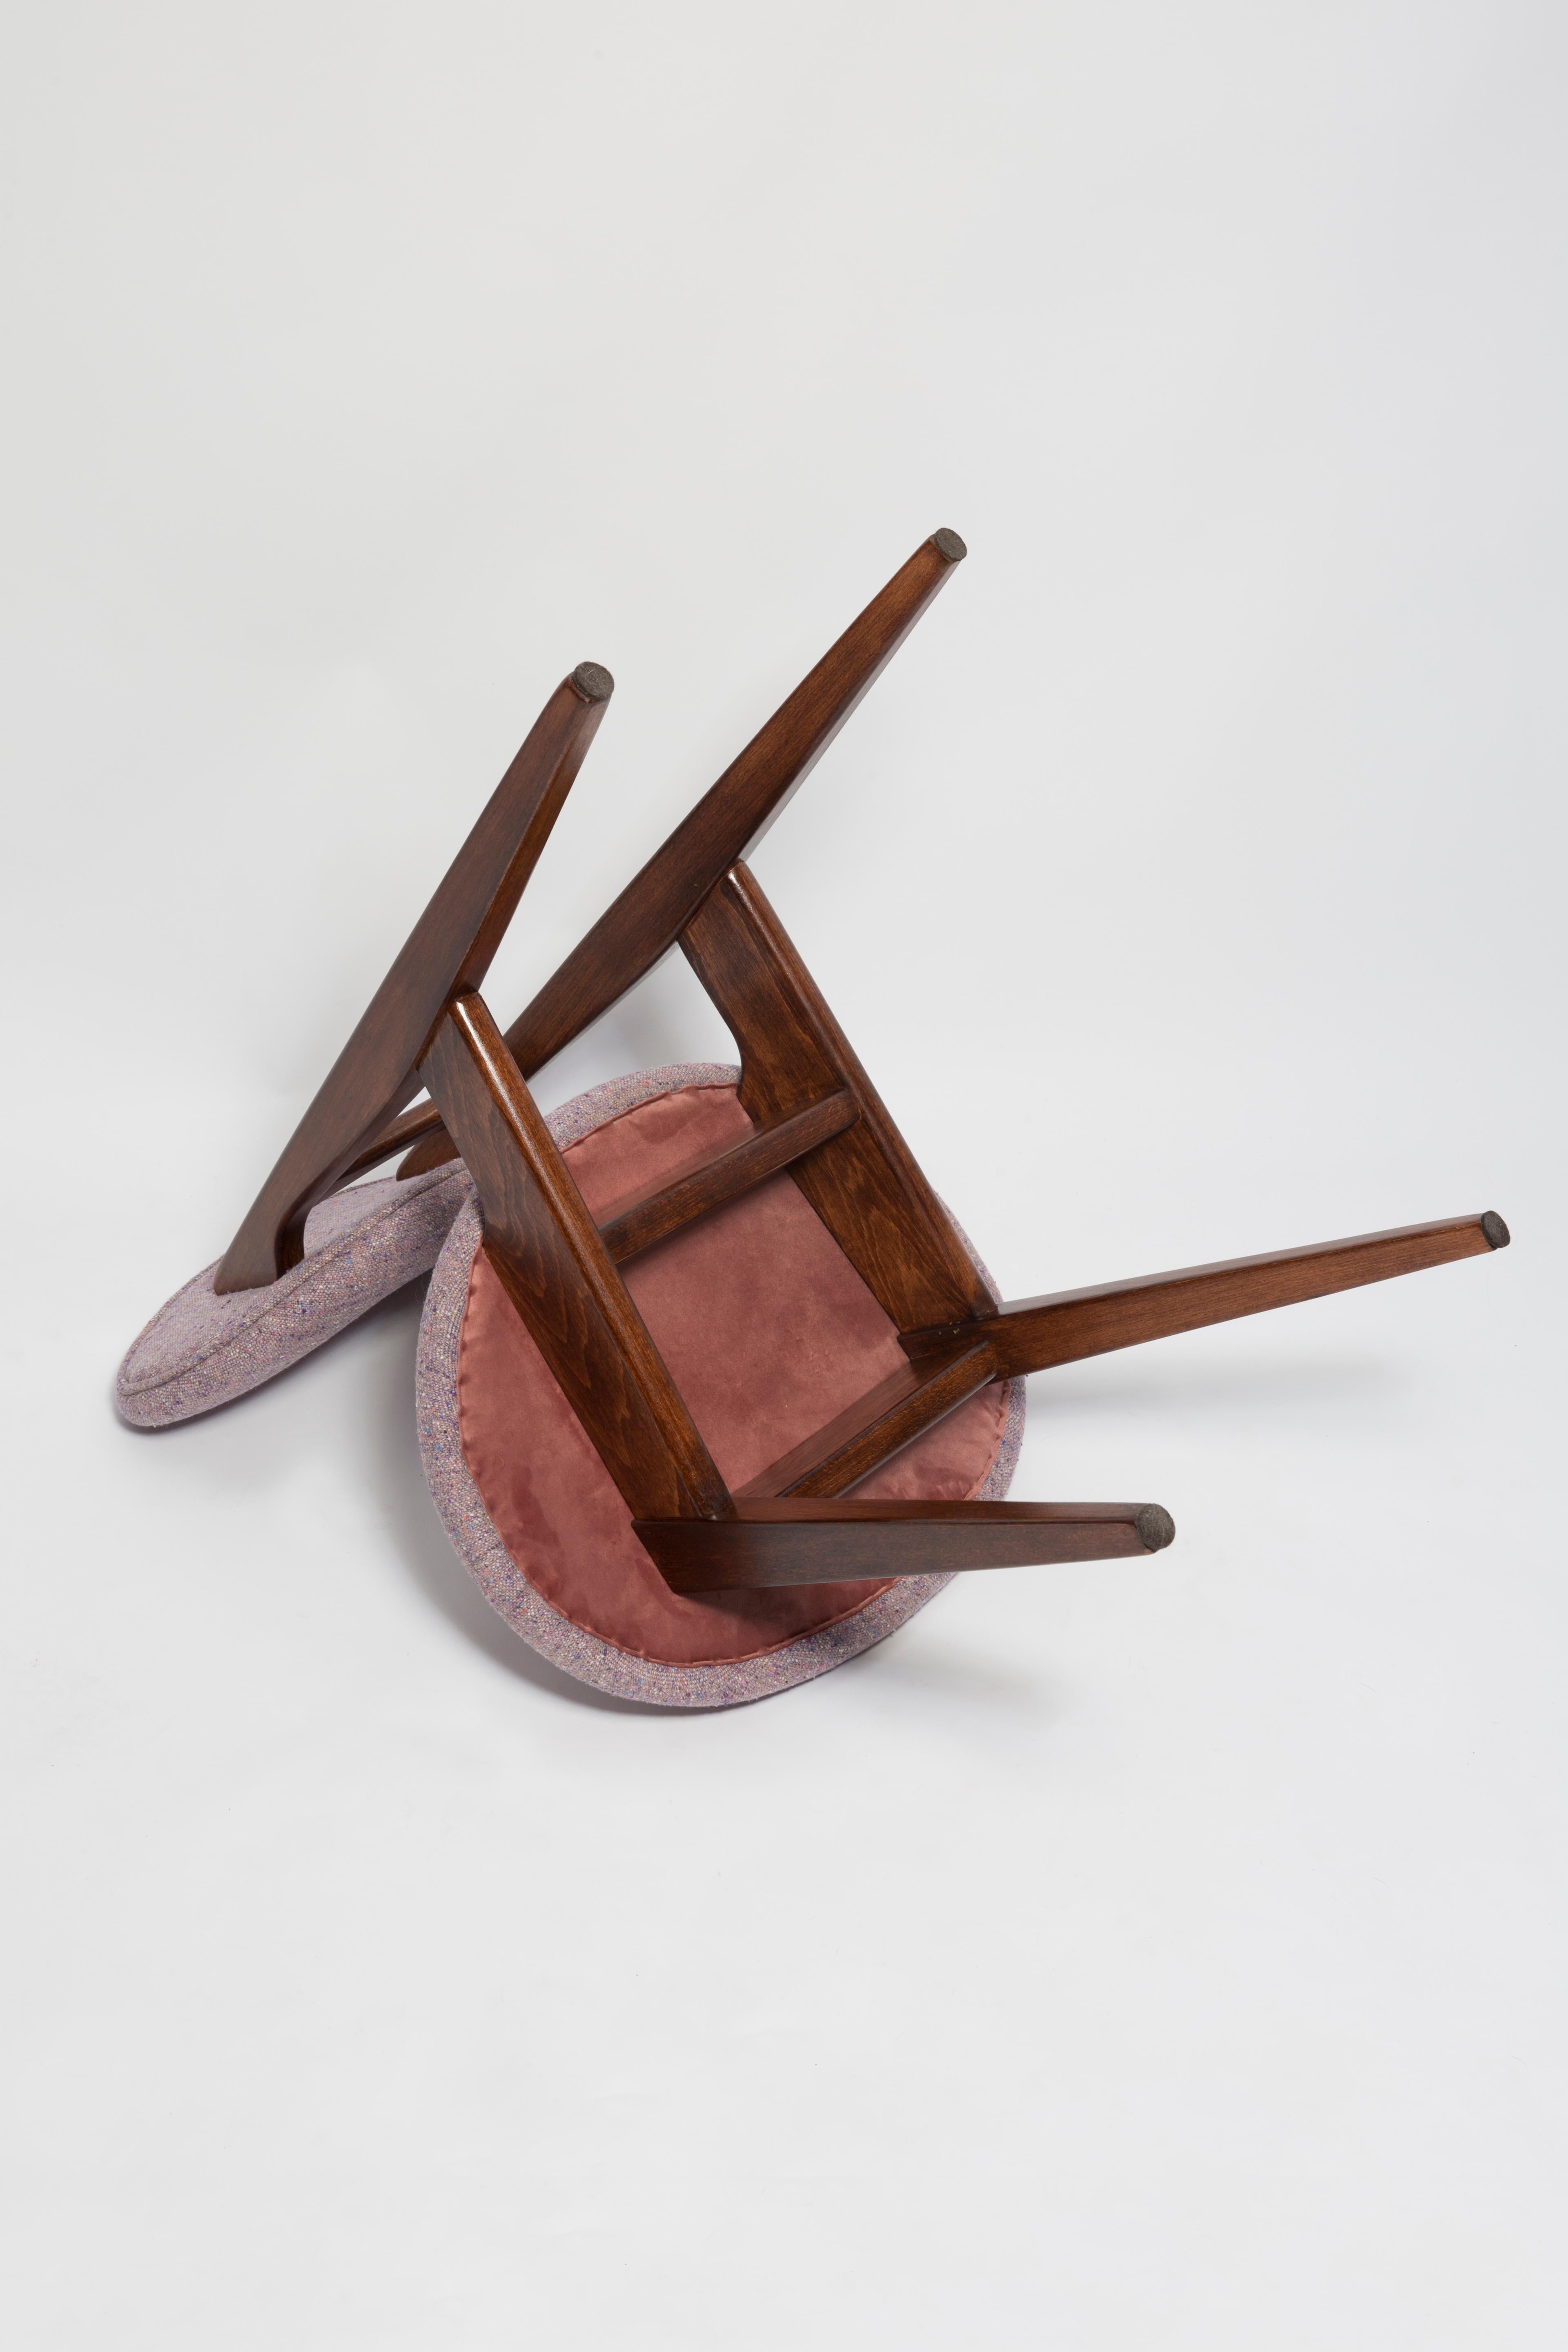 Mid-Century Purple Mushroom Chair, Type 200/128, by J. Kedziorek, Europe, 1960s For Sale 2